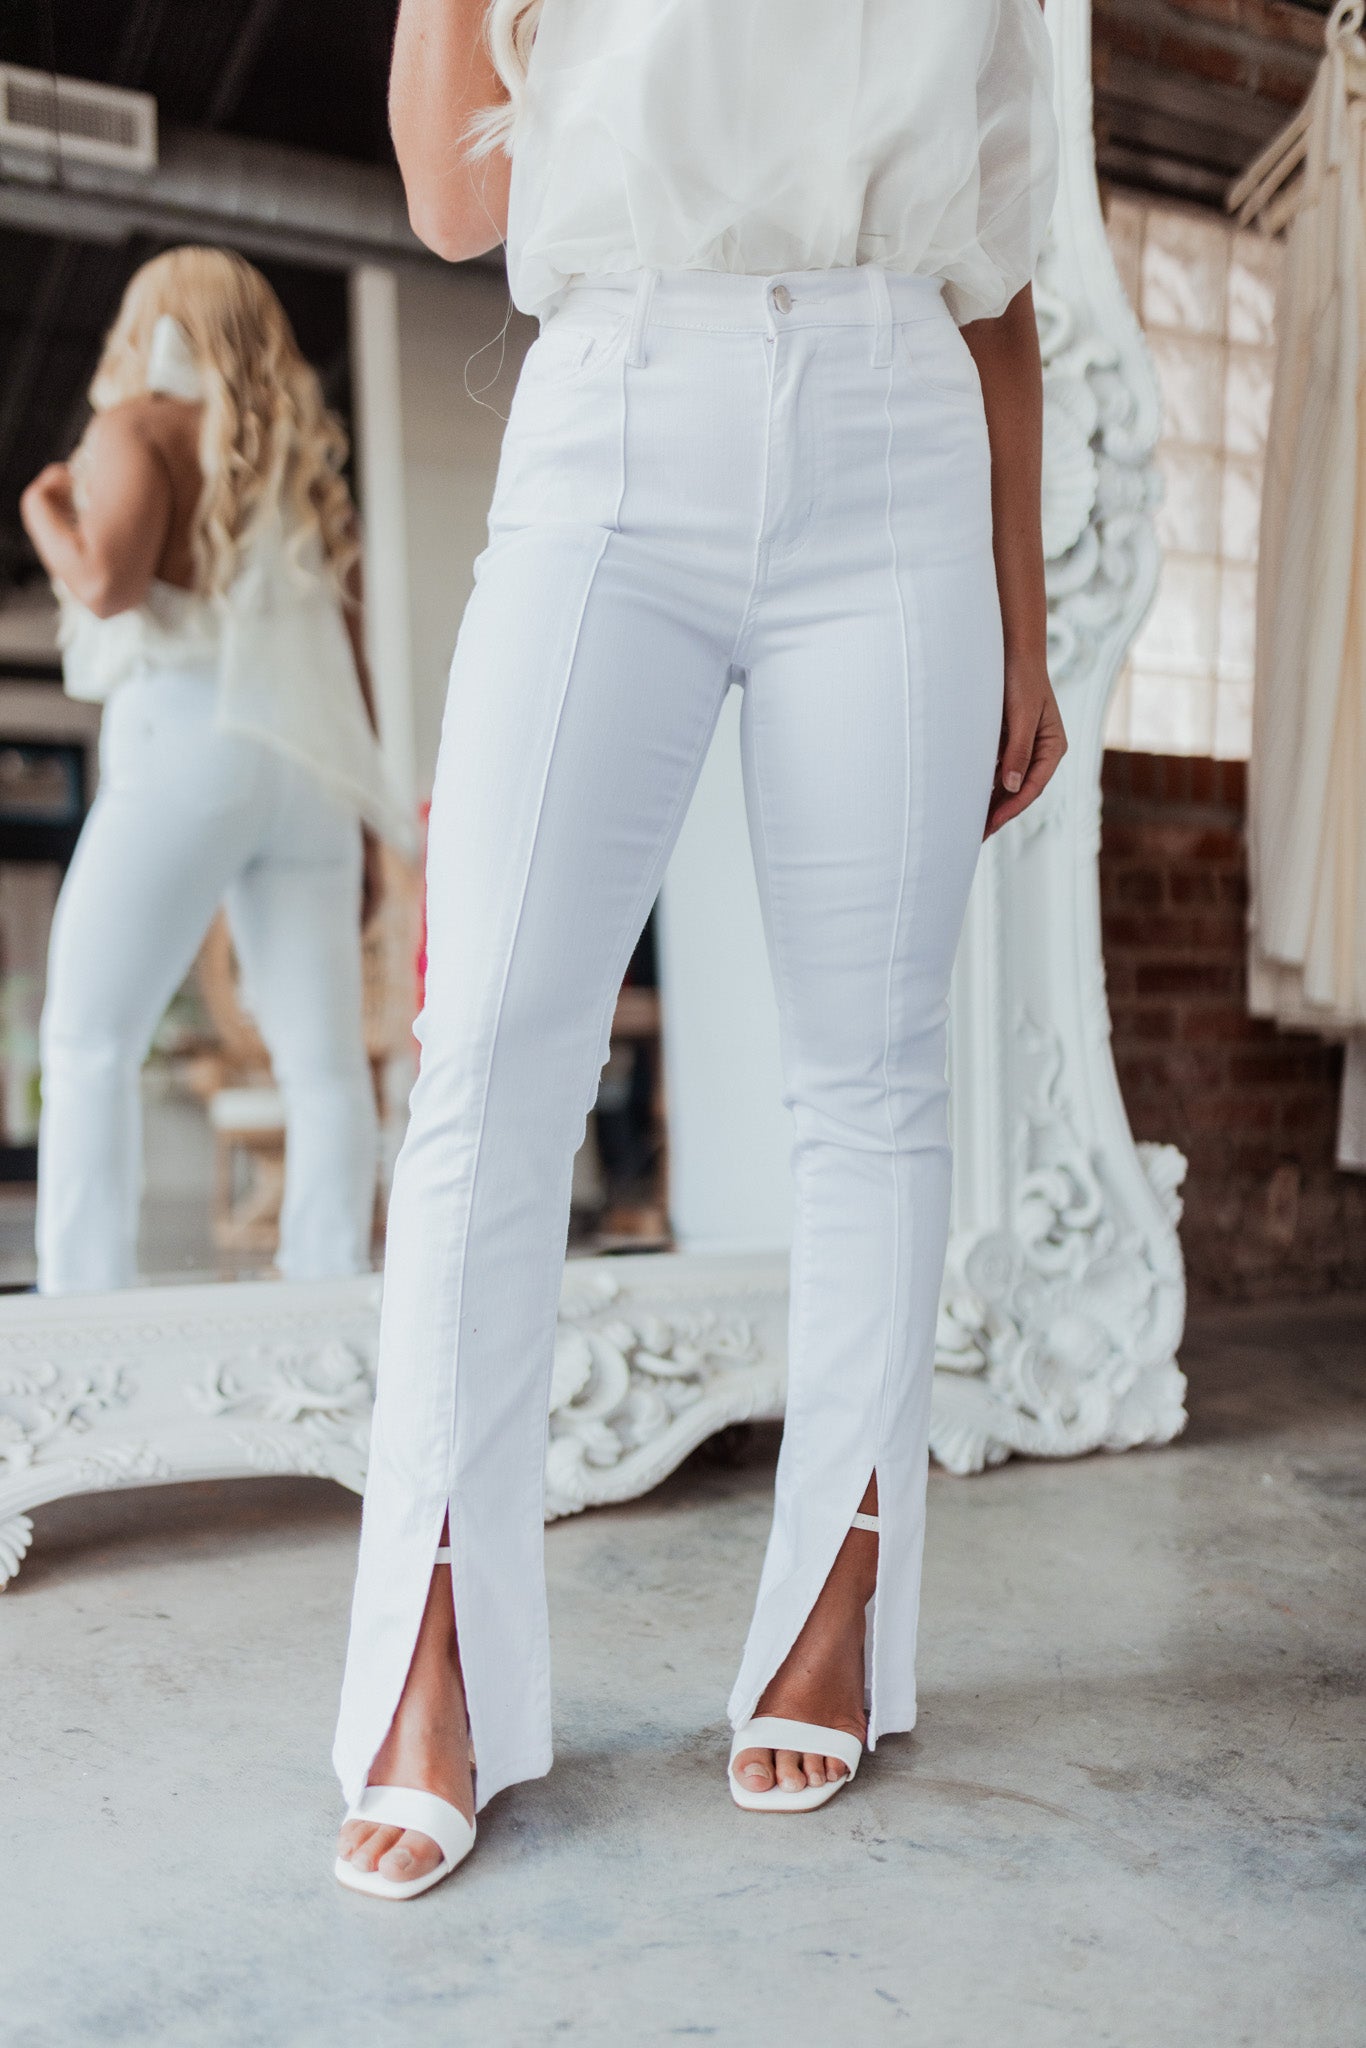 Celine Bootcut Jeans (White) FINAL SALE